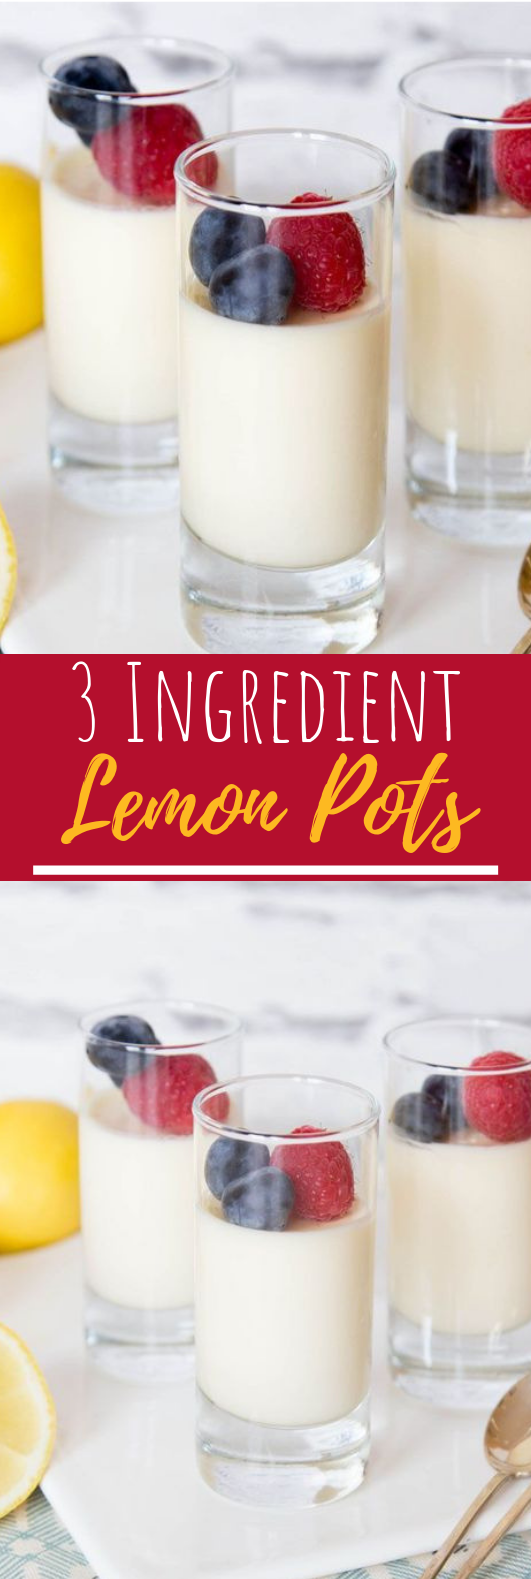 3 Ingredient Lemon Pots #easy #dessert